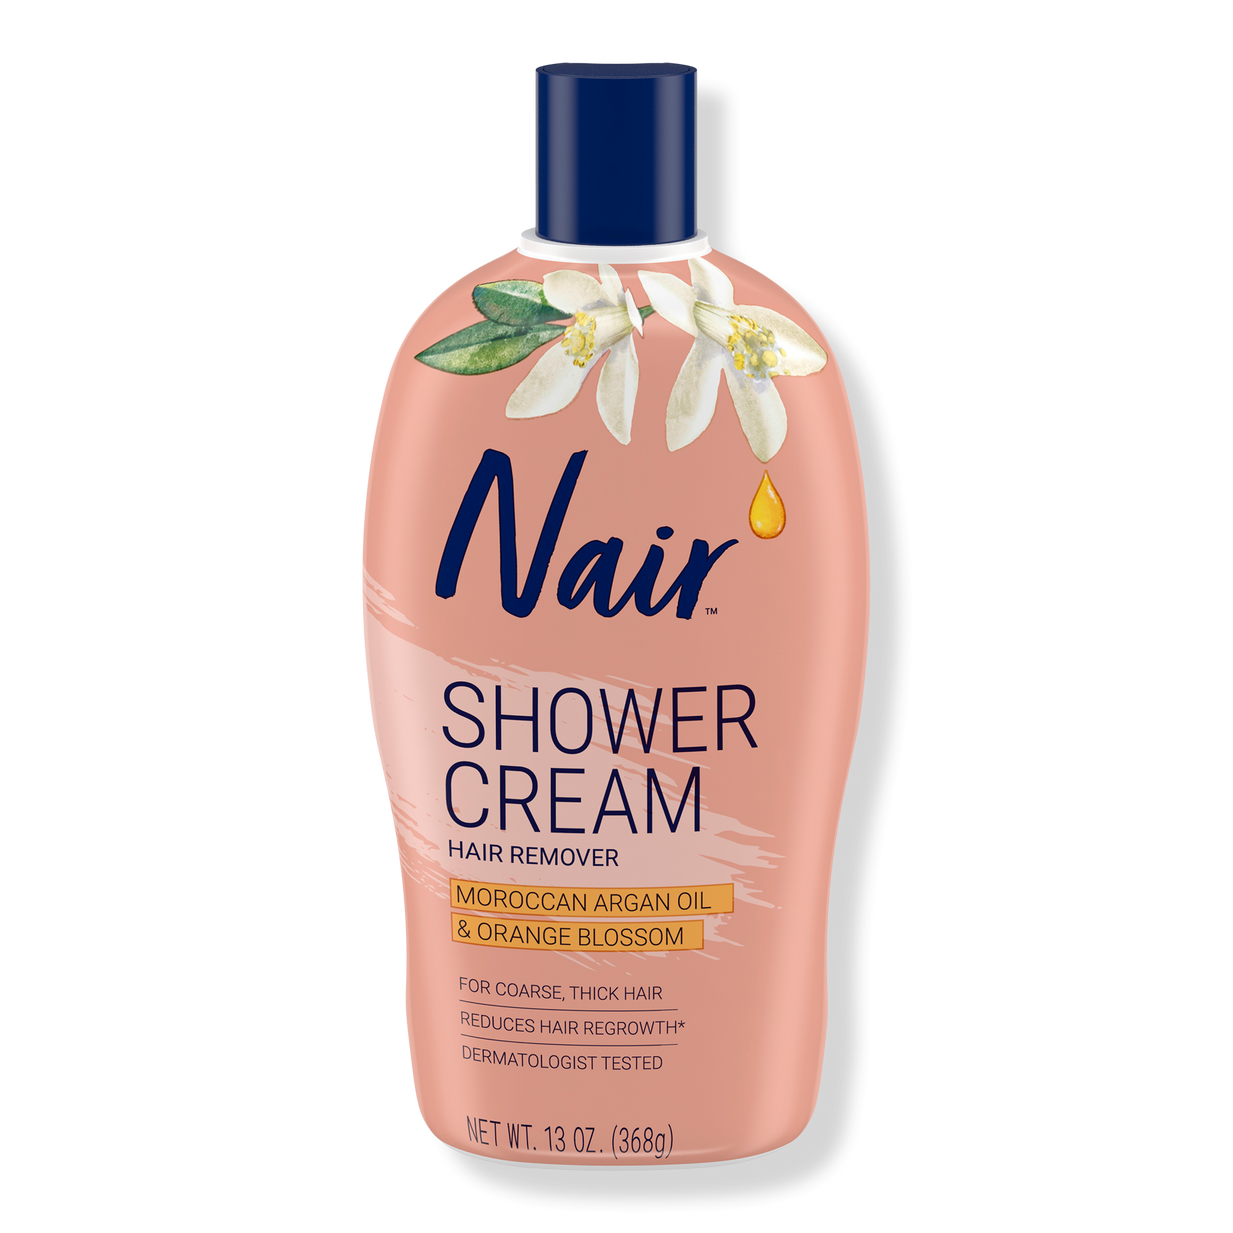 Nourish Moroccan Argan Oil Shower Cream - Nair | Ulta Beauty